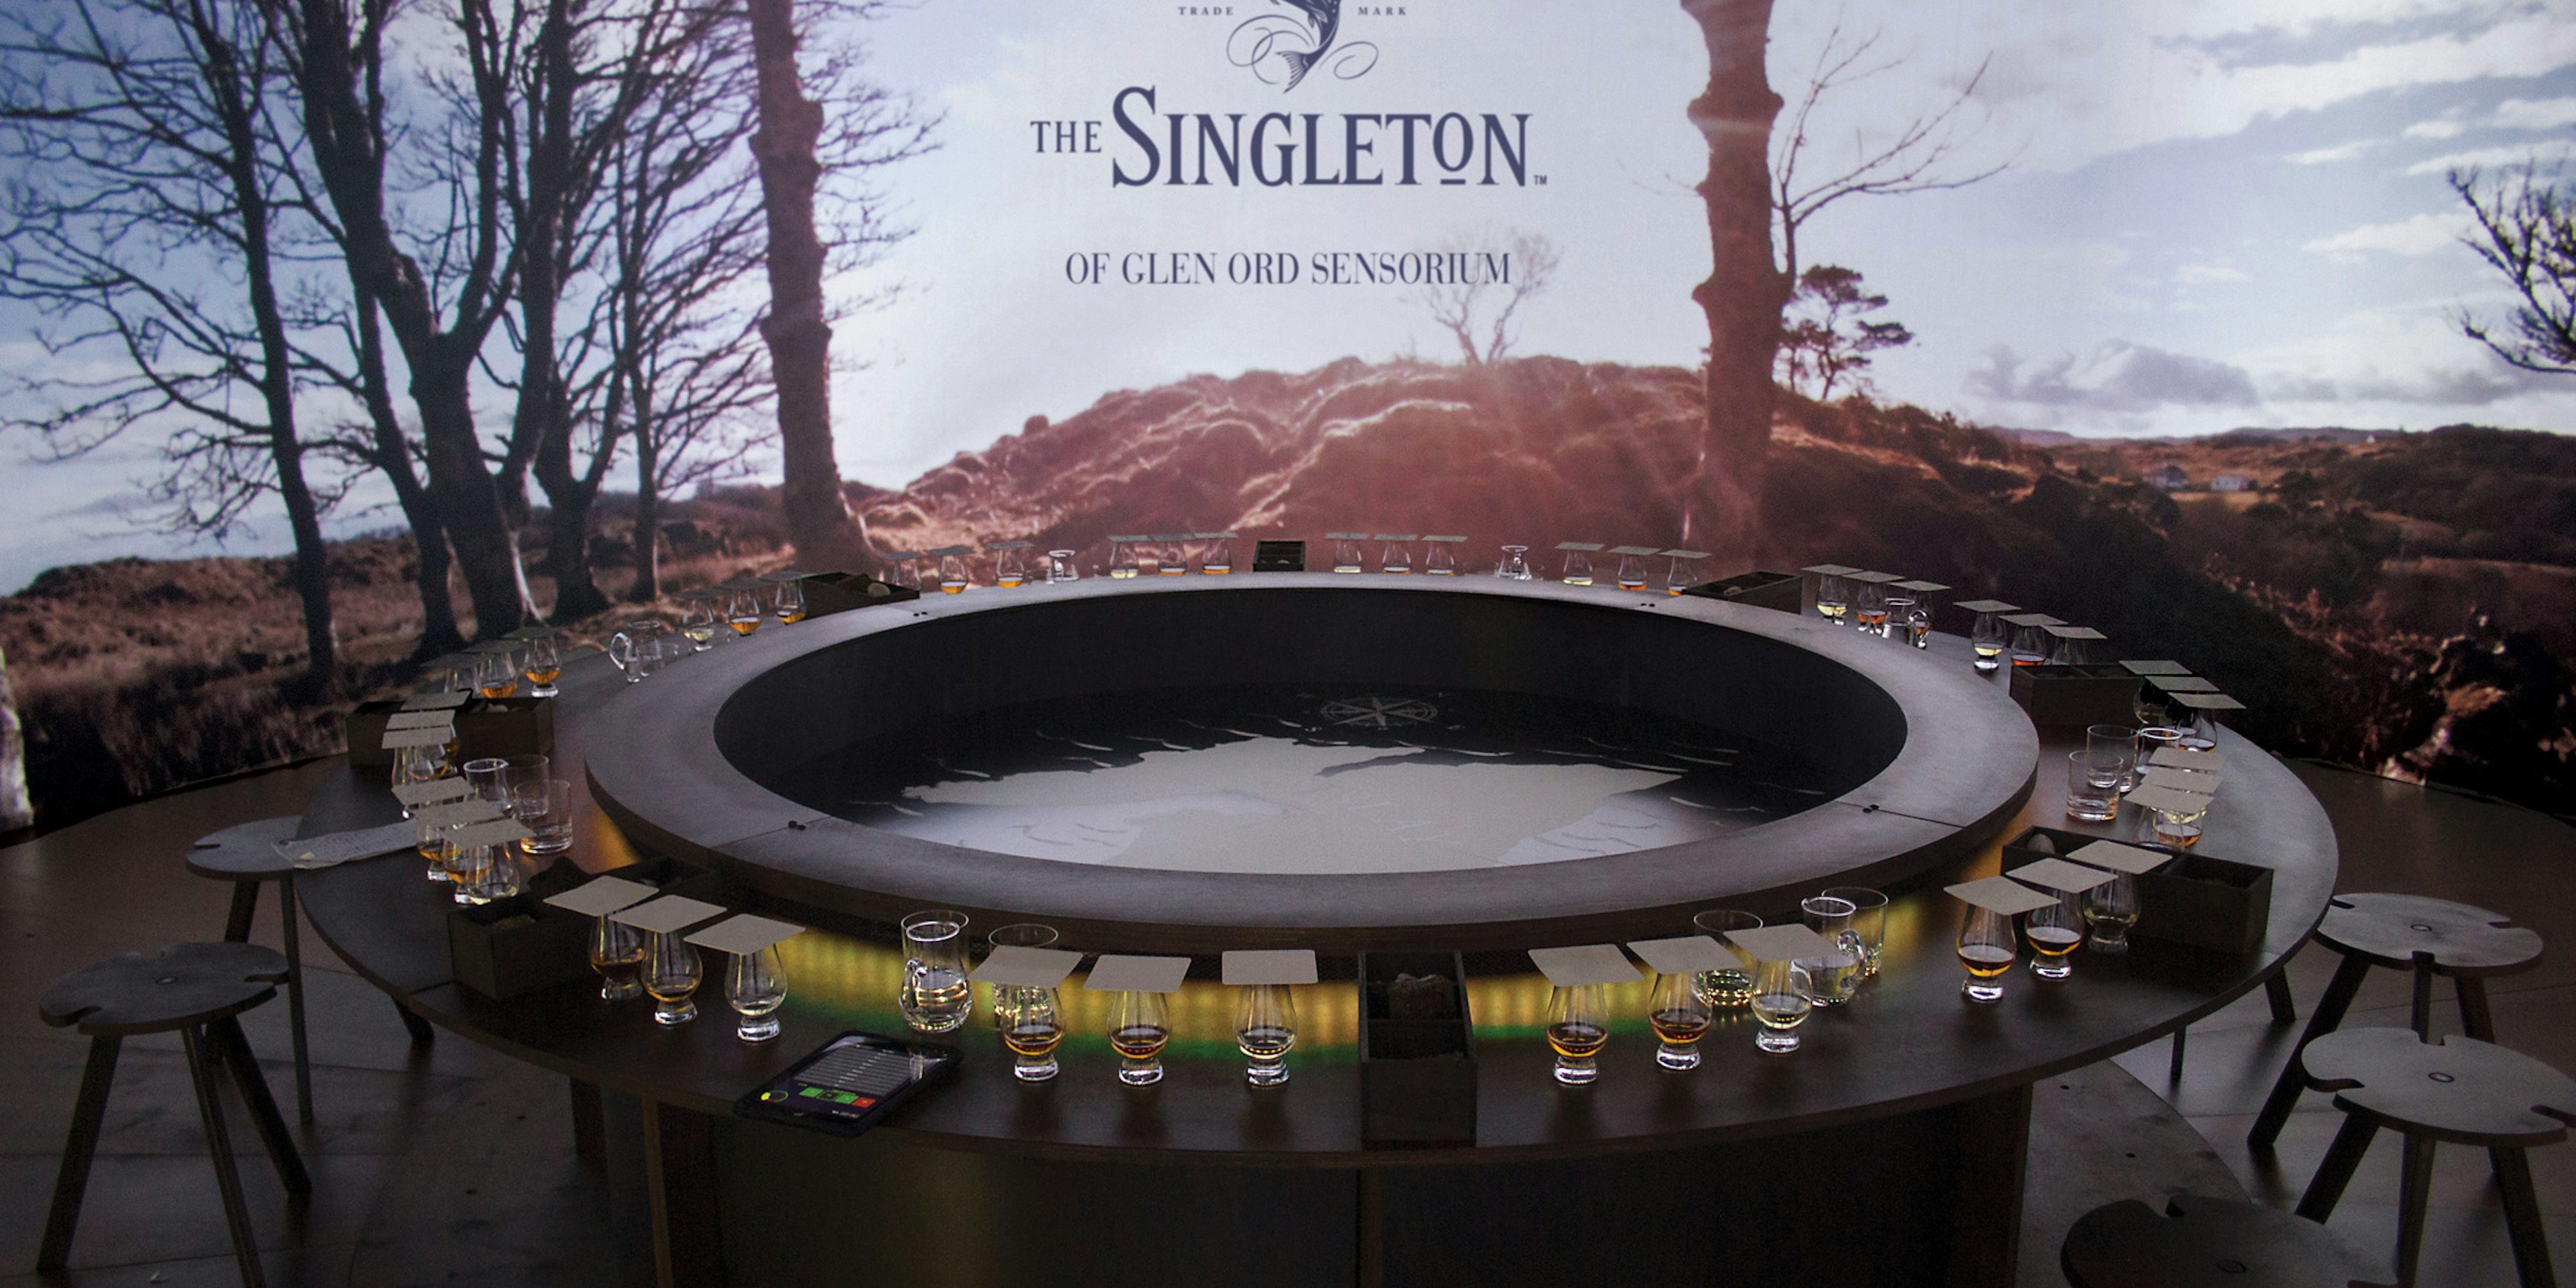 The Singleton of Glen Ord Sensorium